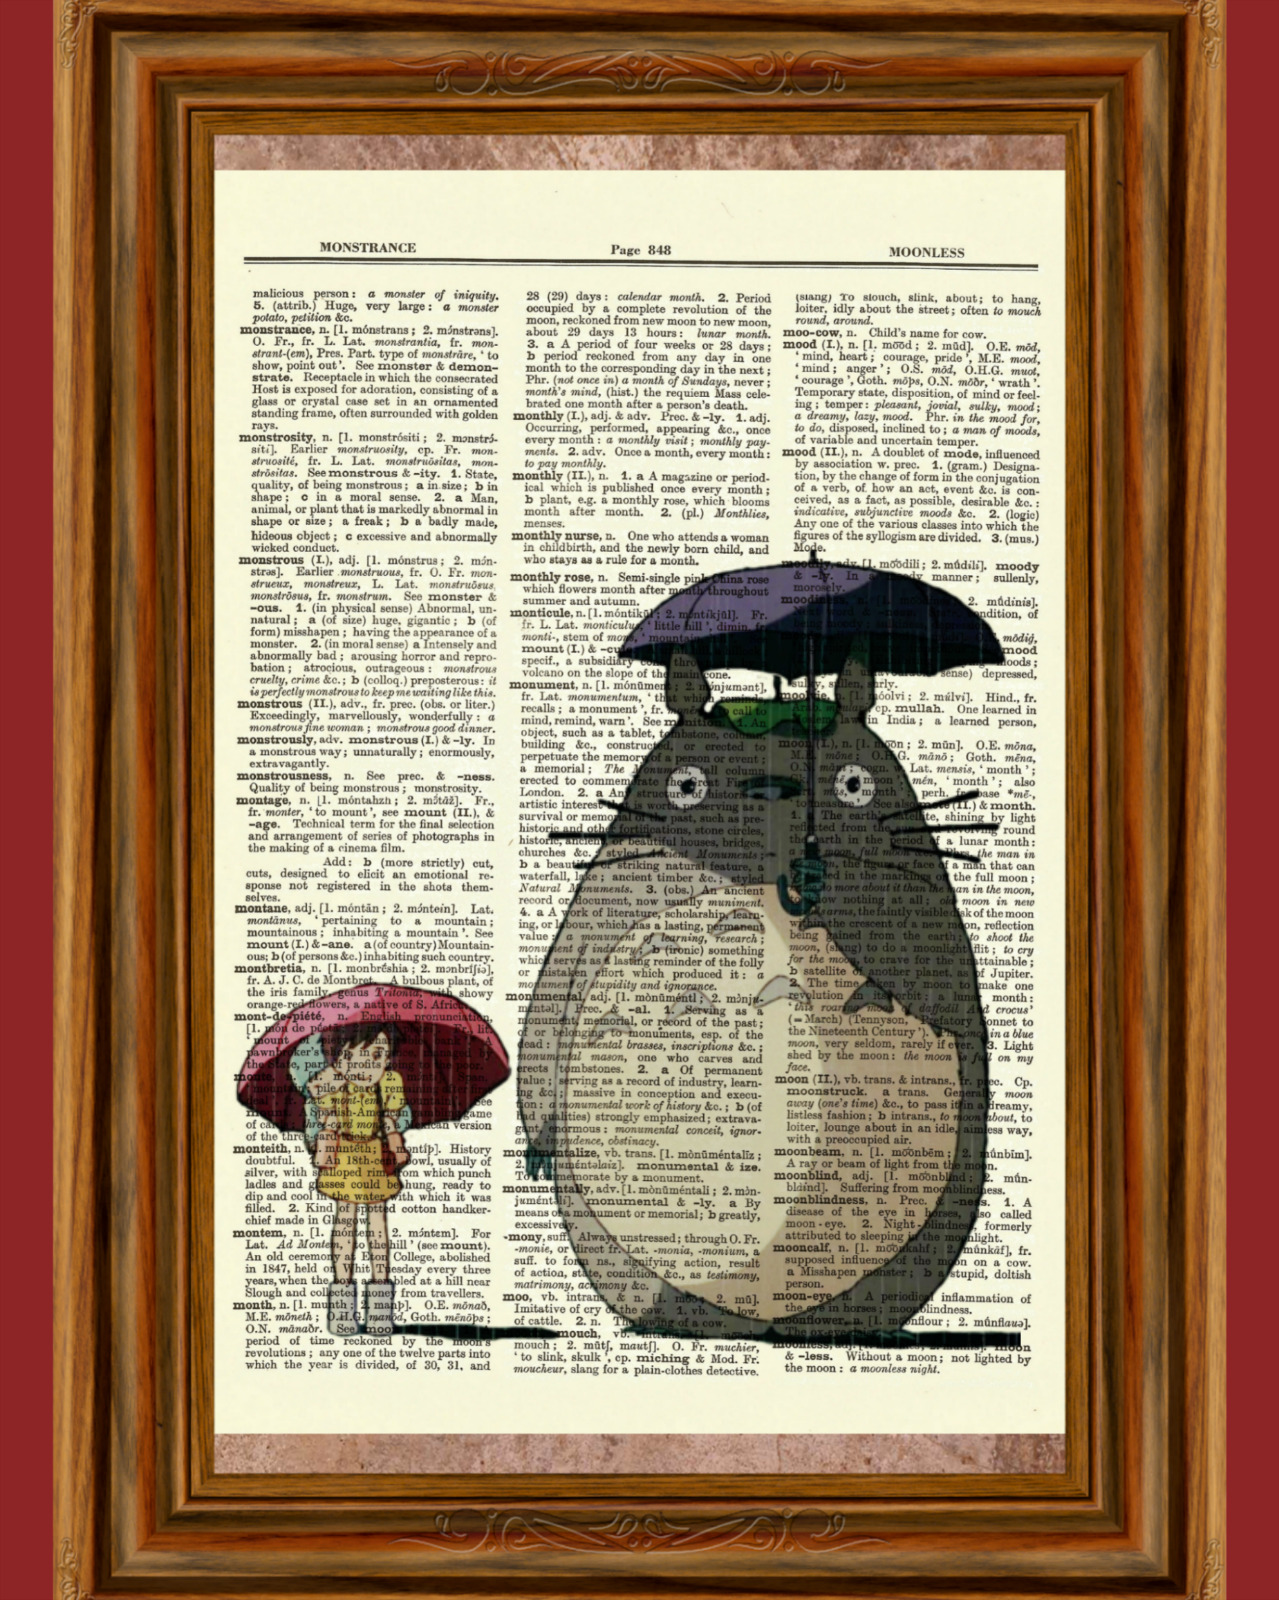 My Neighbor Totoro Dictionary Art Print Poster Picture Anime Ghibli Umbrella